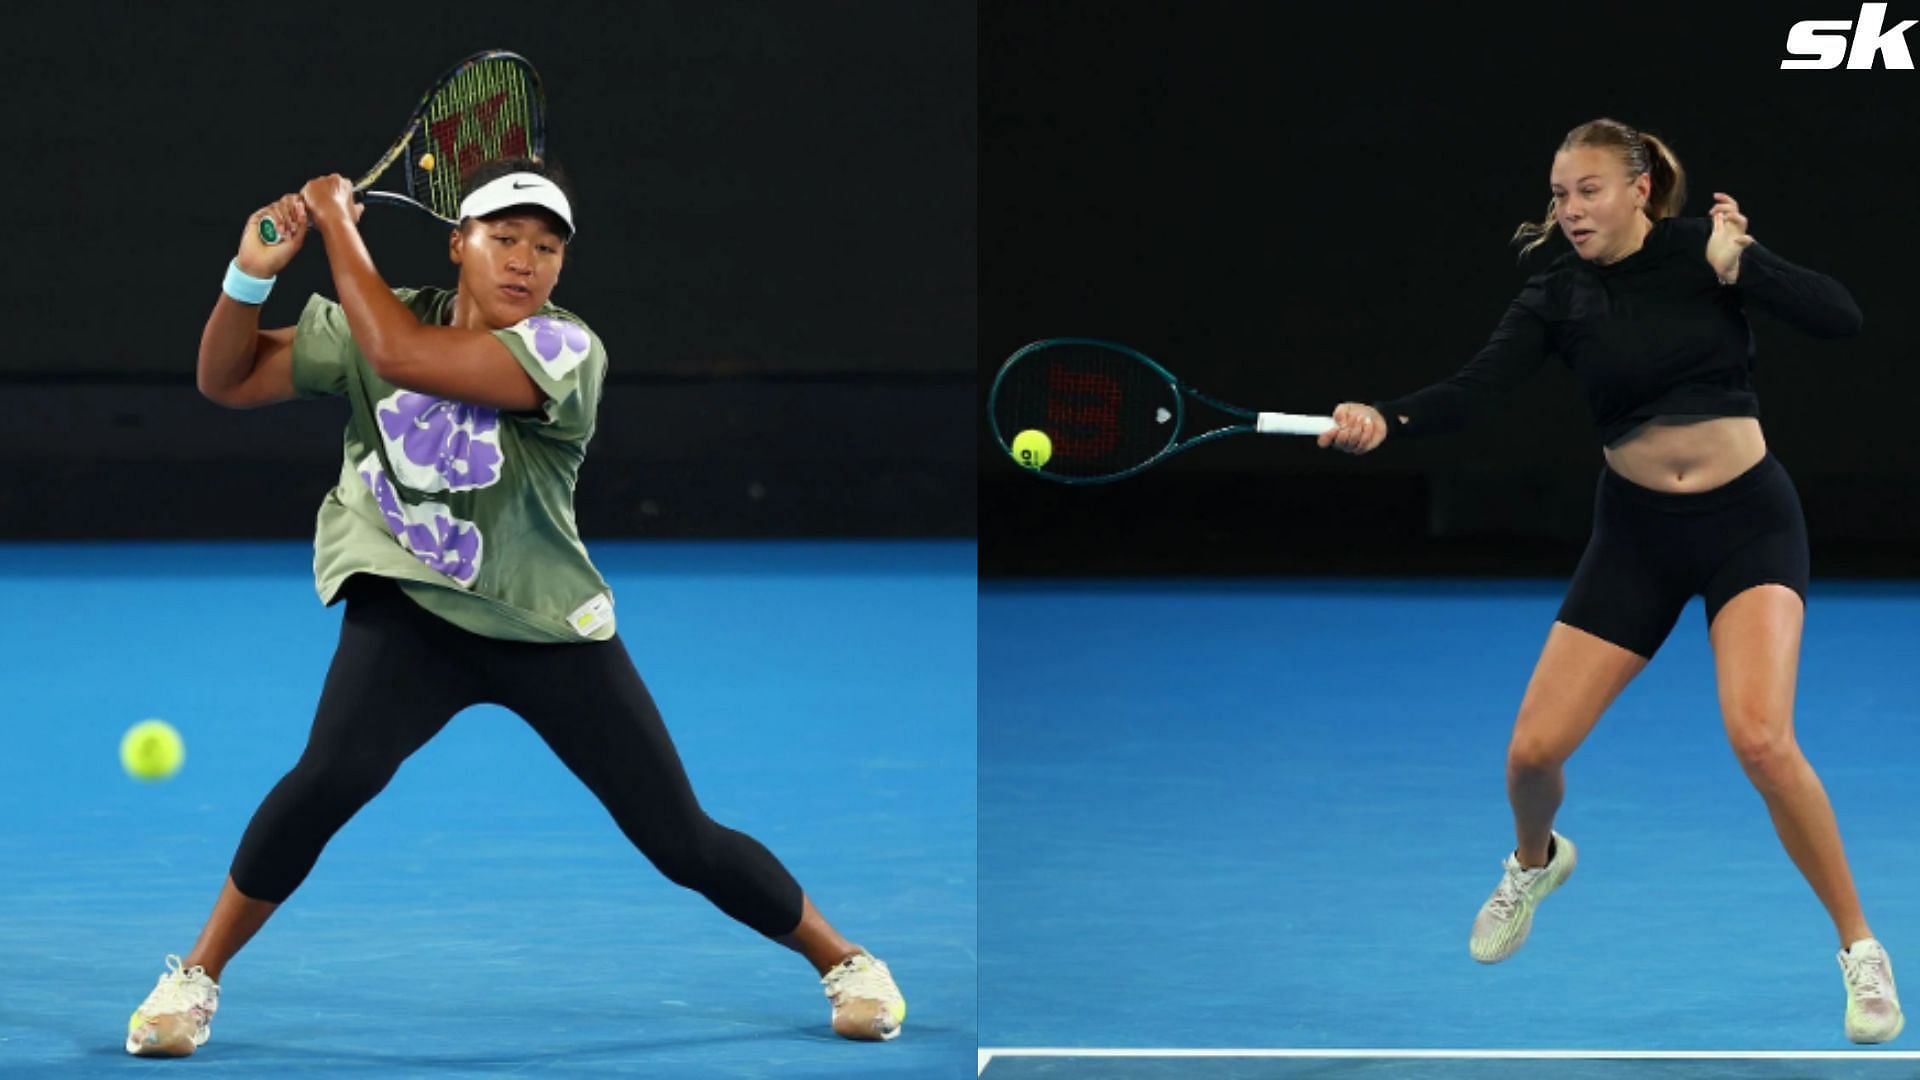 Naomi Osaka and Amanda Anisimova practise together ahead of the Australian Open 